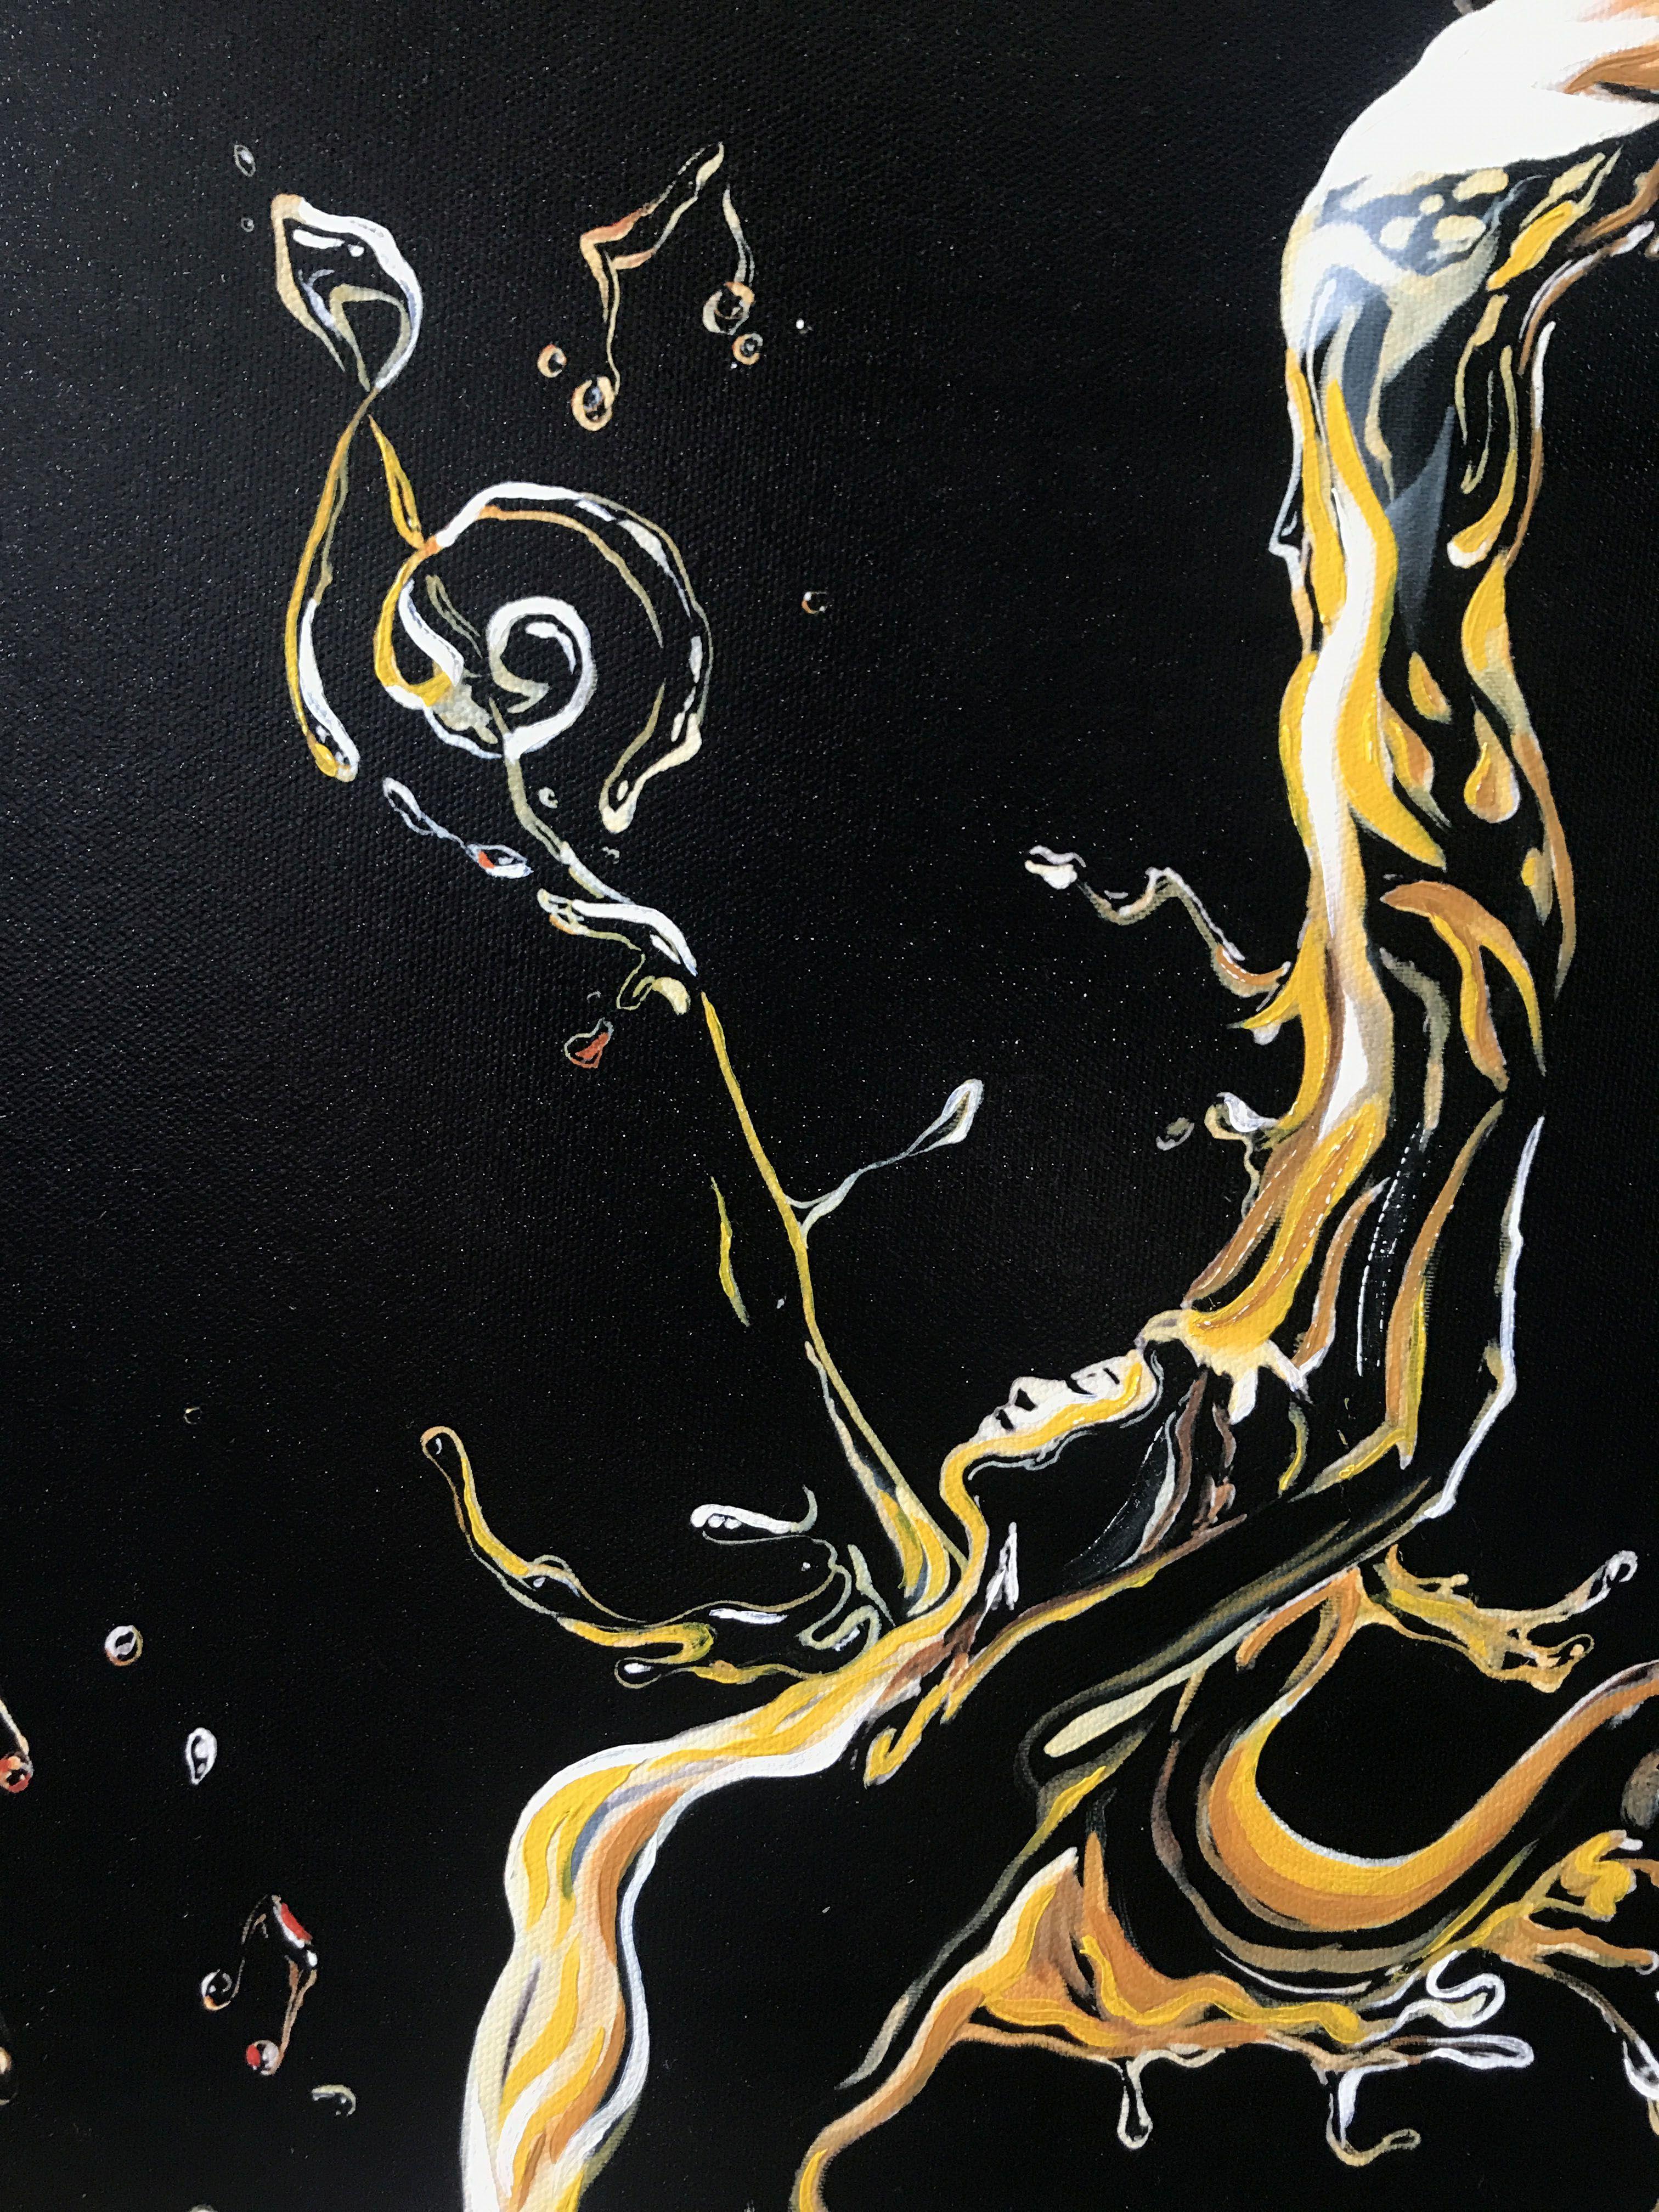 Michael Godard Enhanced Giclee on Canvas "Dancing on the Pallette" EA 117/150